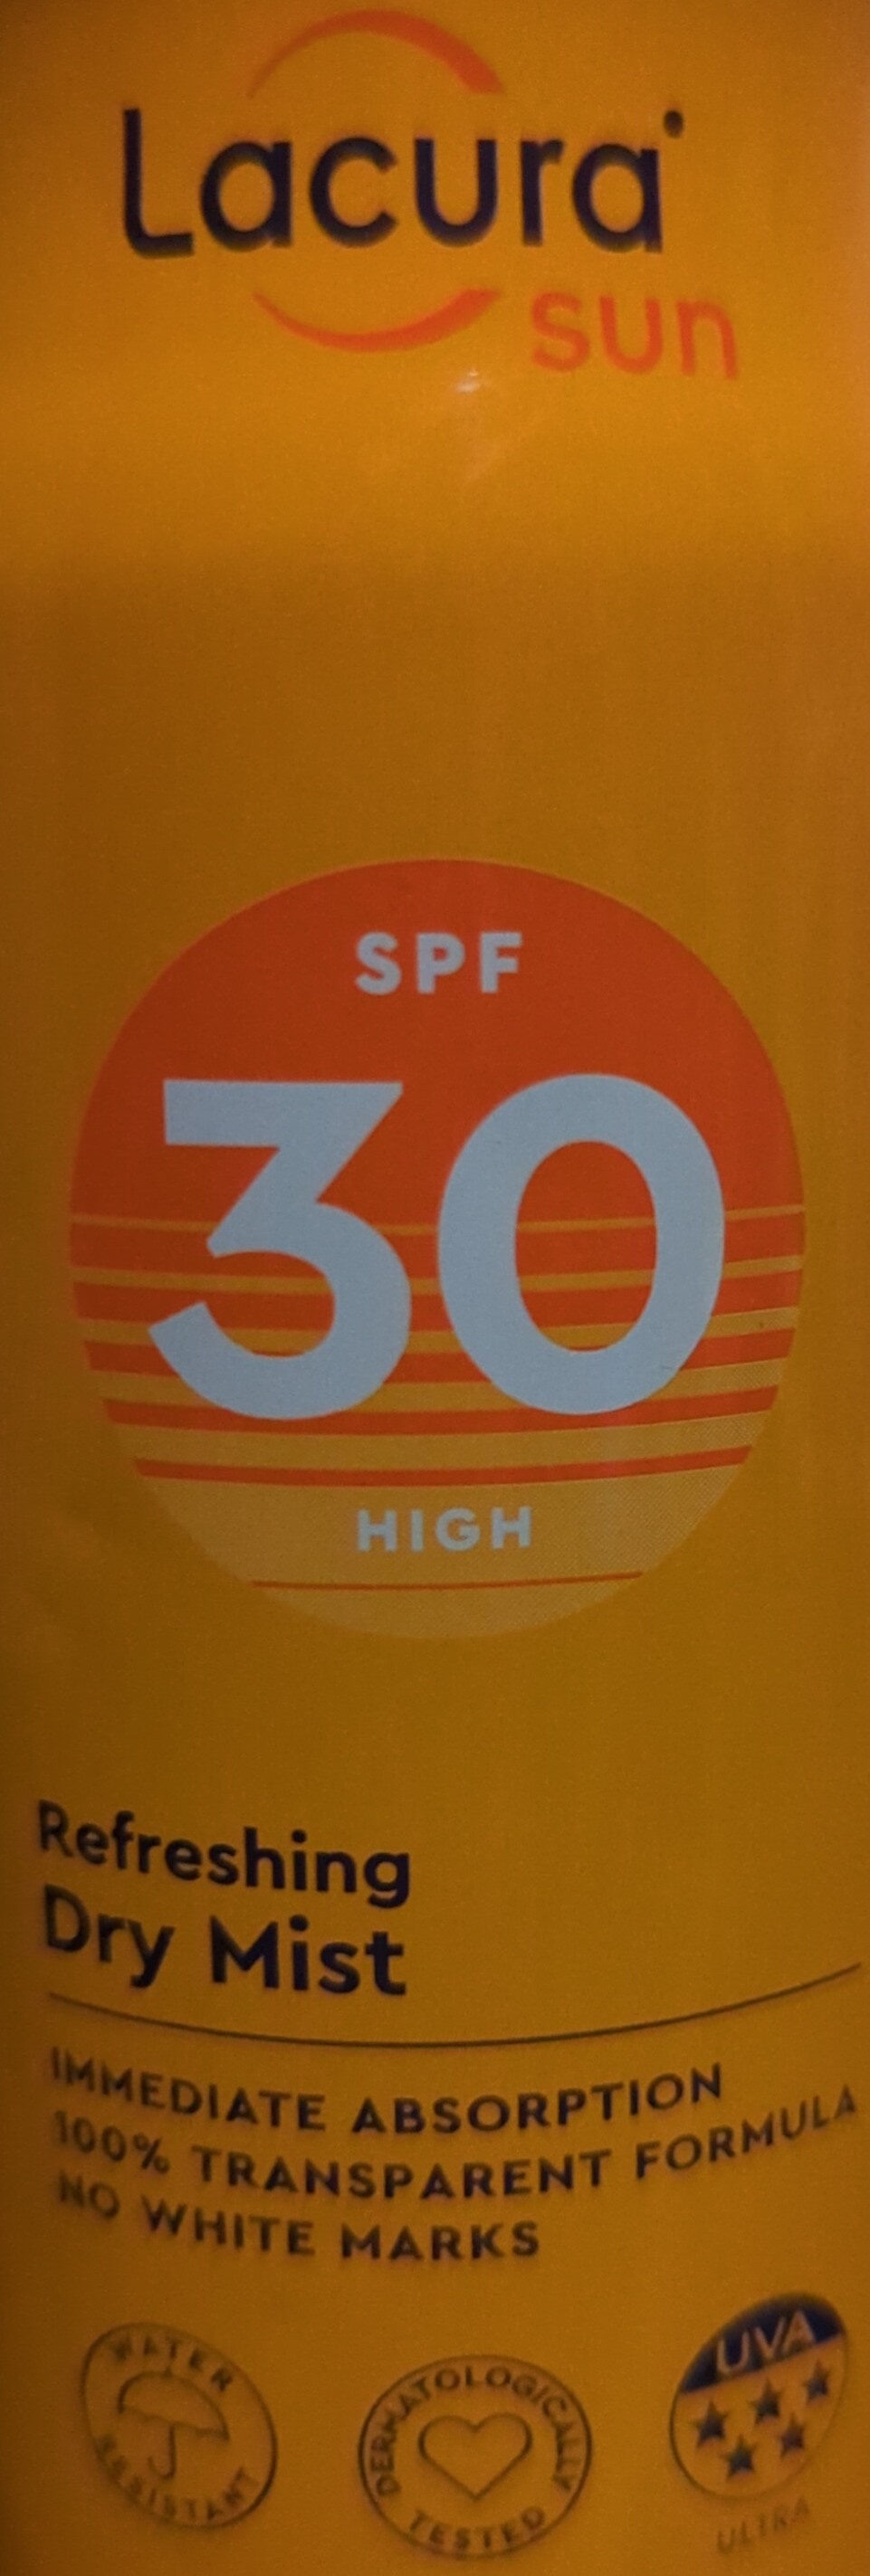 SPF 30 High, Refreshing Dry Mist - Tuote - en